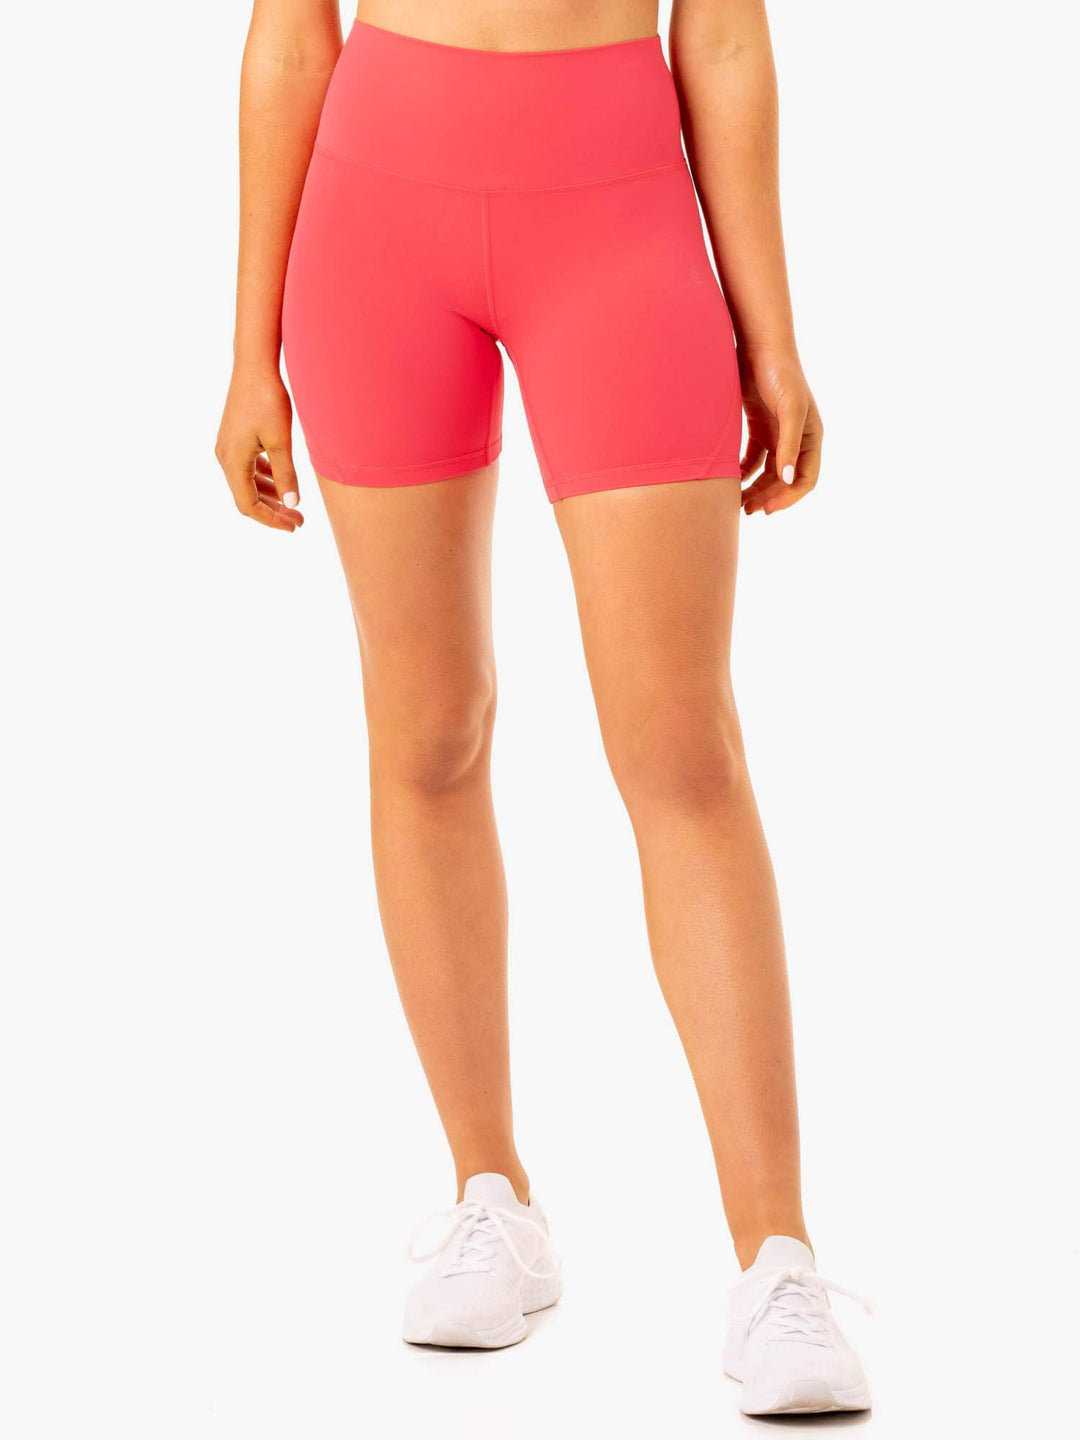 NKD Align Shorts - Watermelon Clothing Ryderwear 